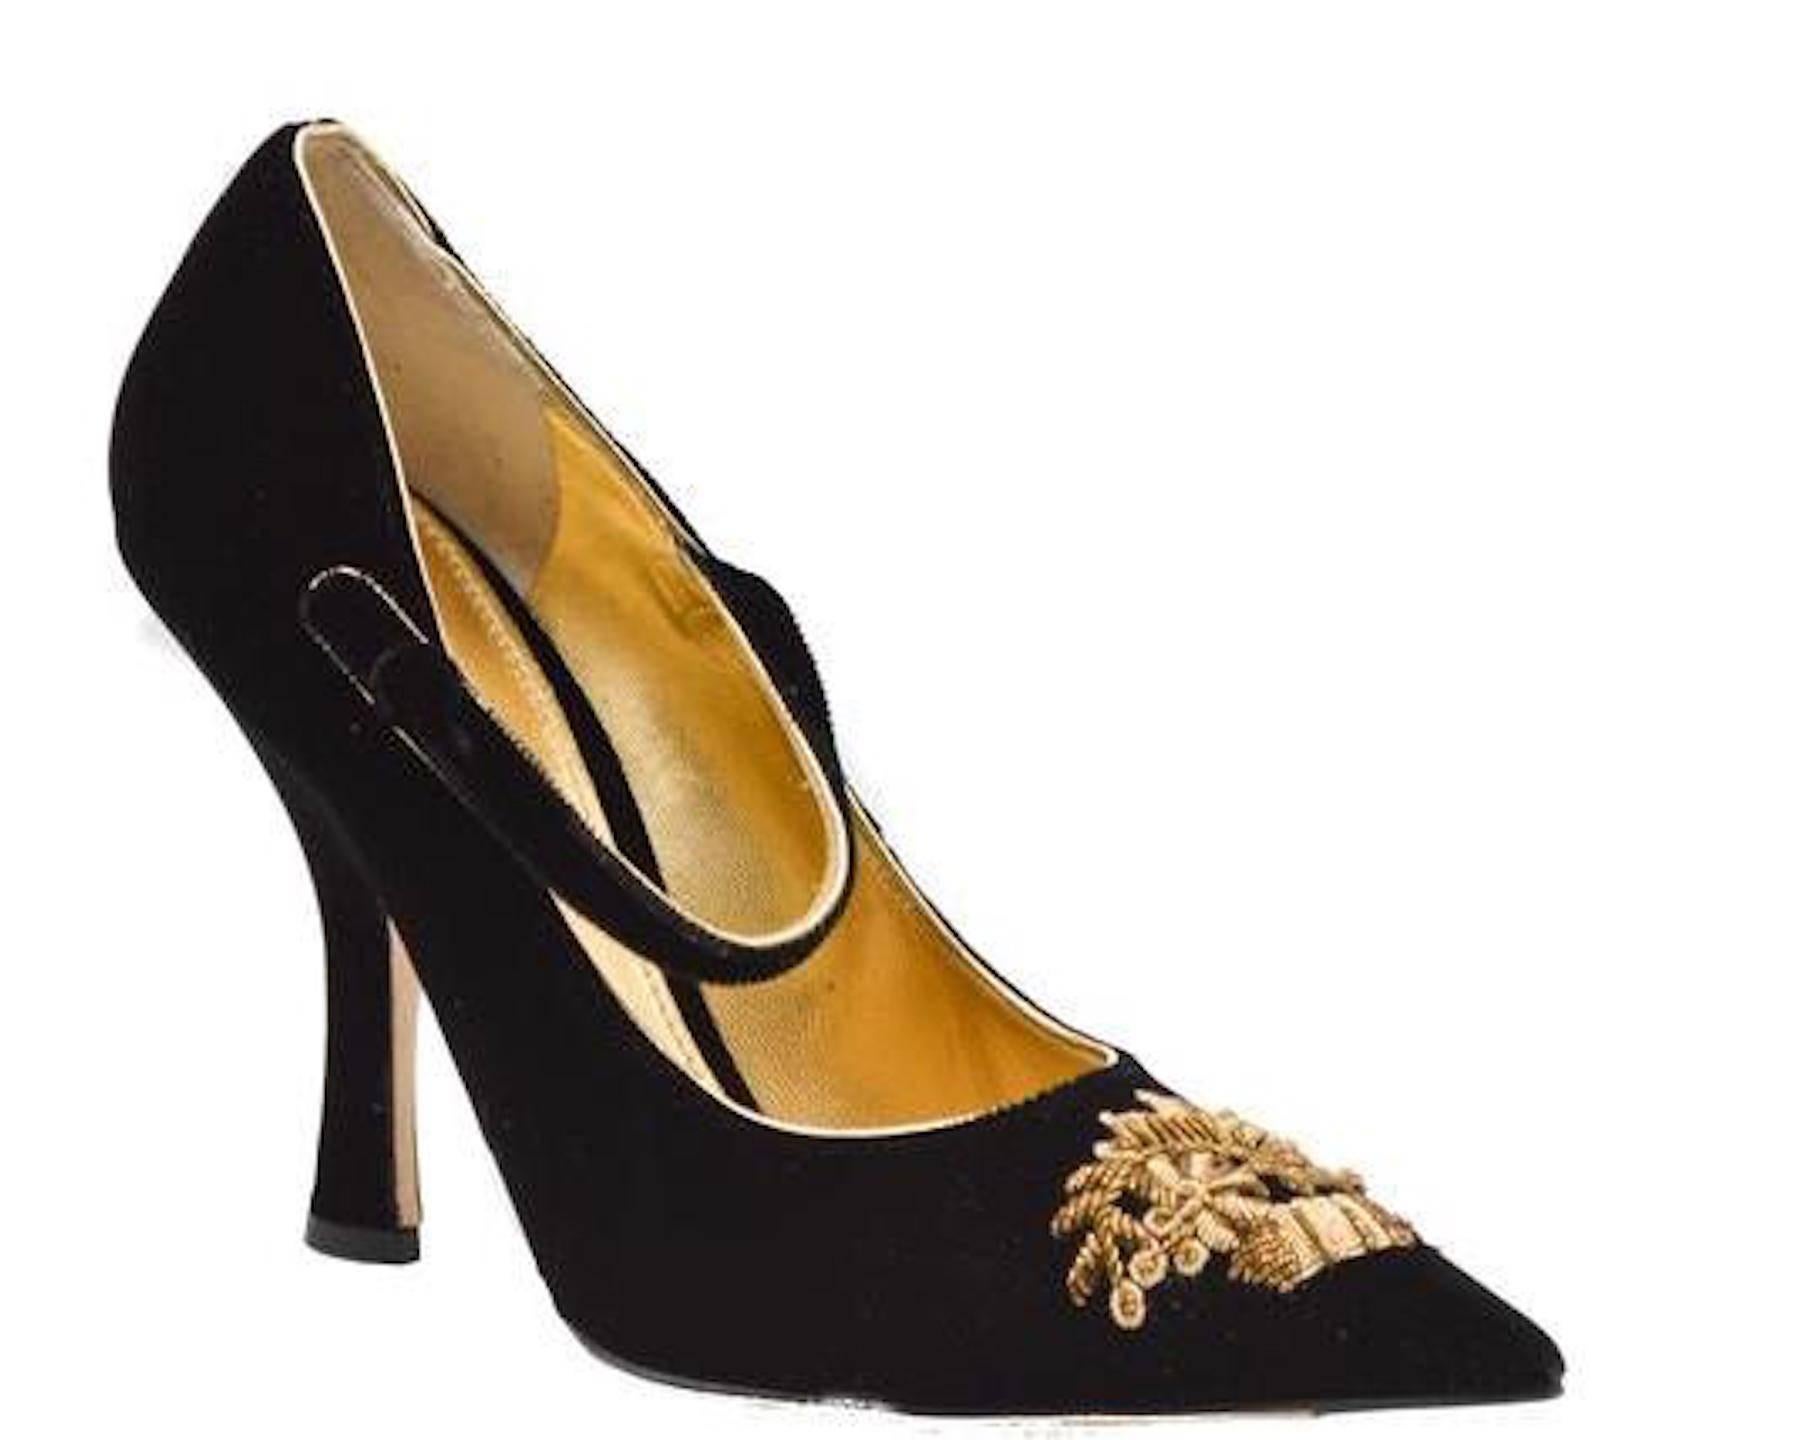 NEW! Dolce & Gabbana Runway Black Gold Evening Mary Jane Heels in Box 1